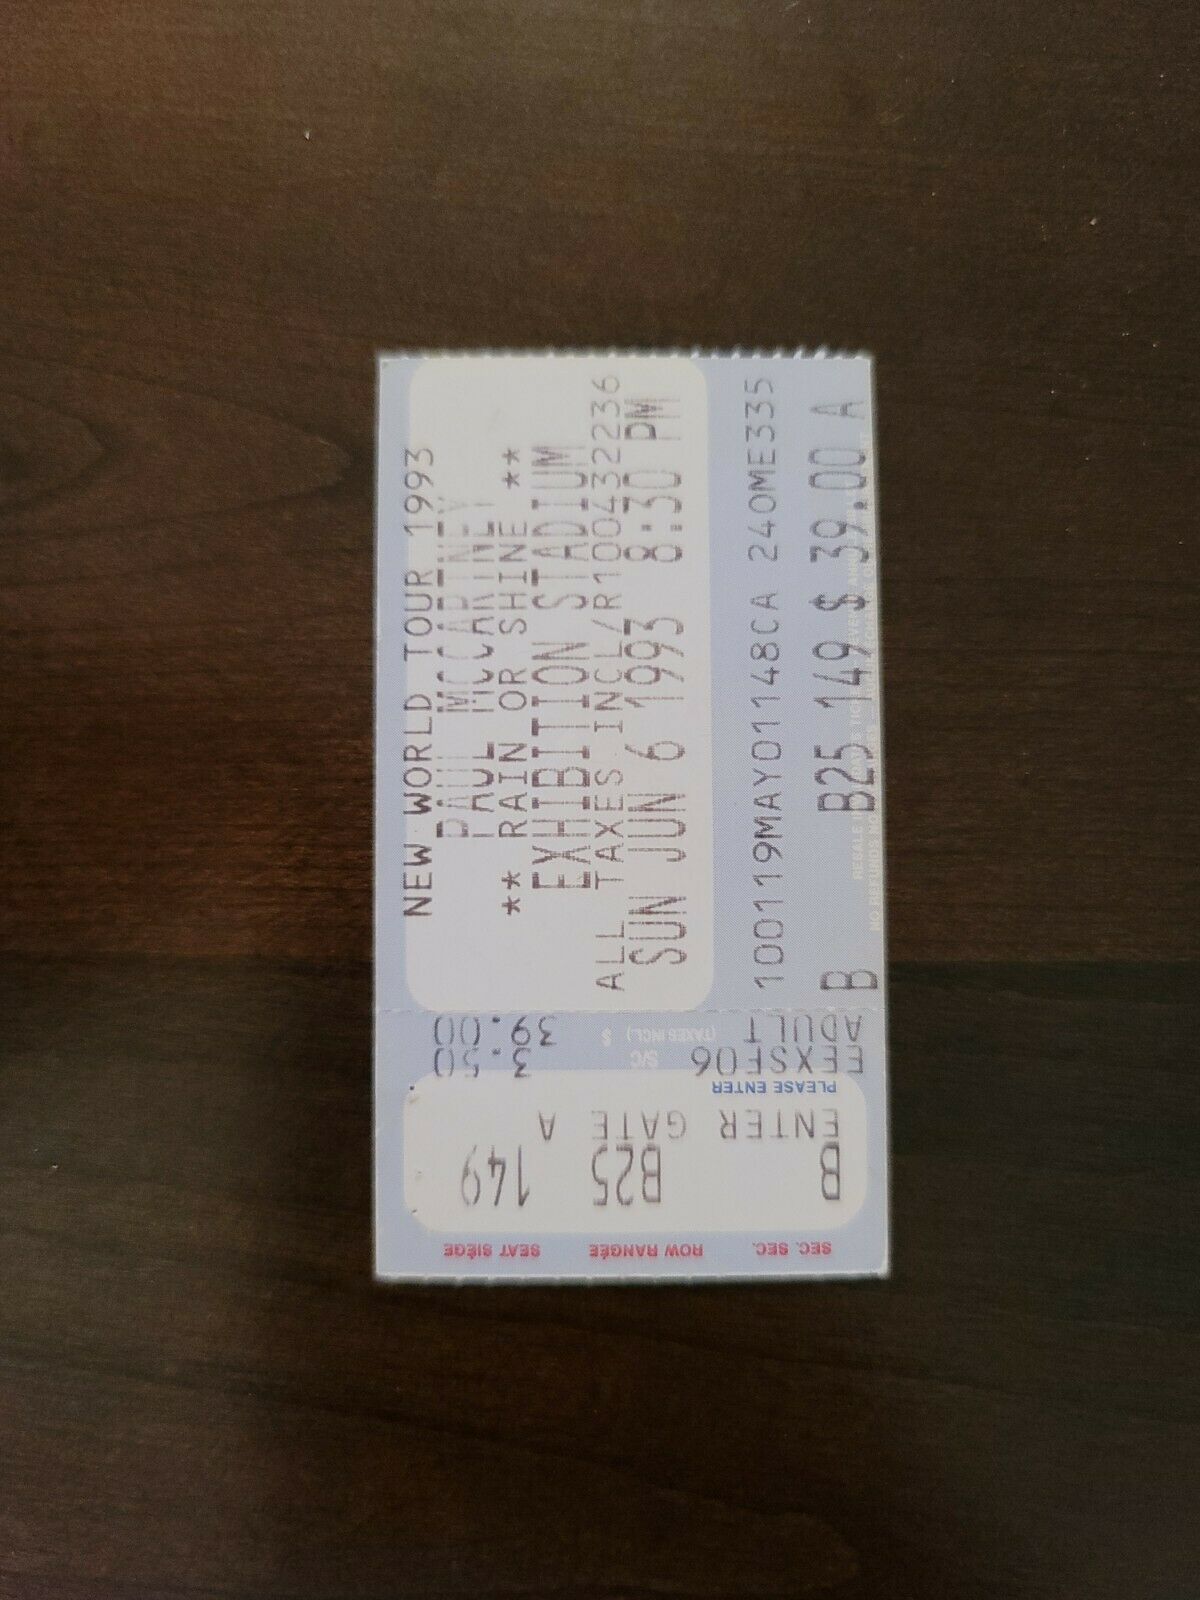 Paul McCartney 1993, Toronto Exhibition Stadium Original Concert Ticket Stub